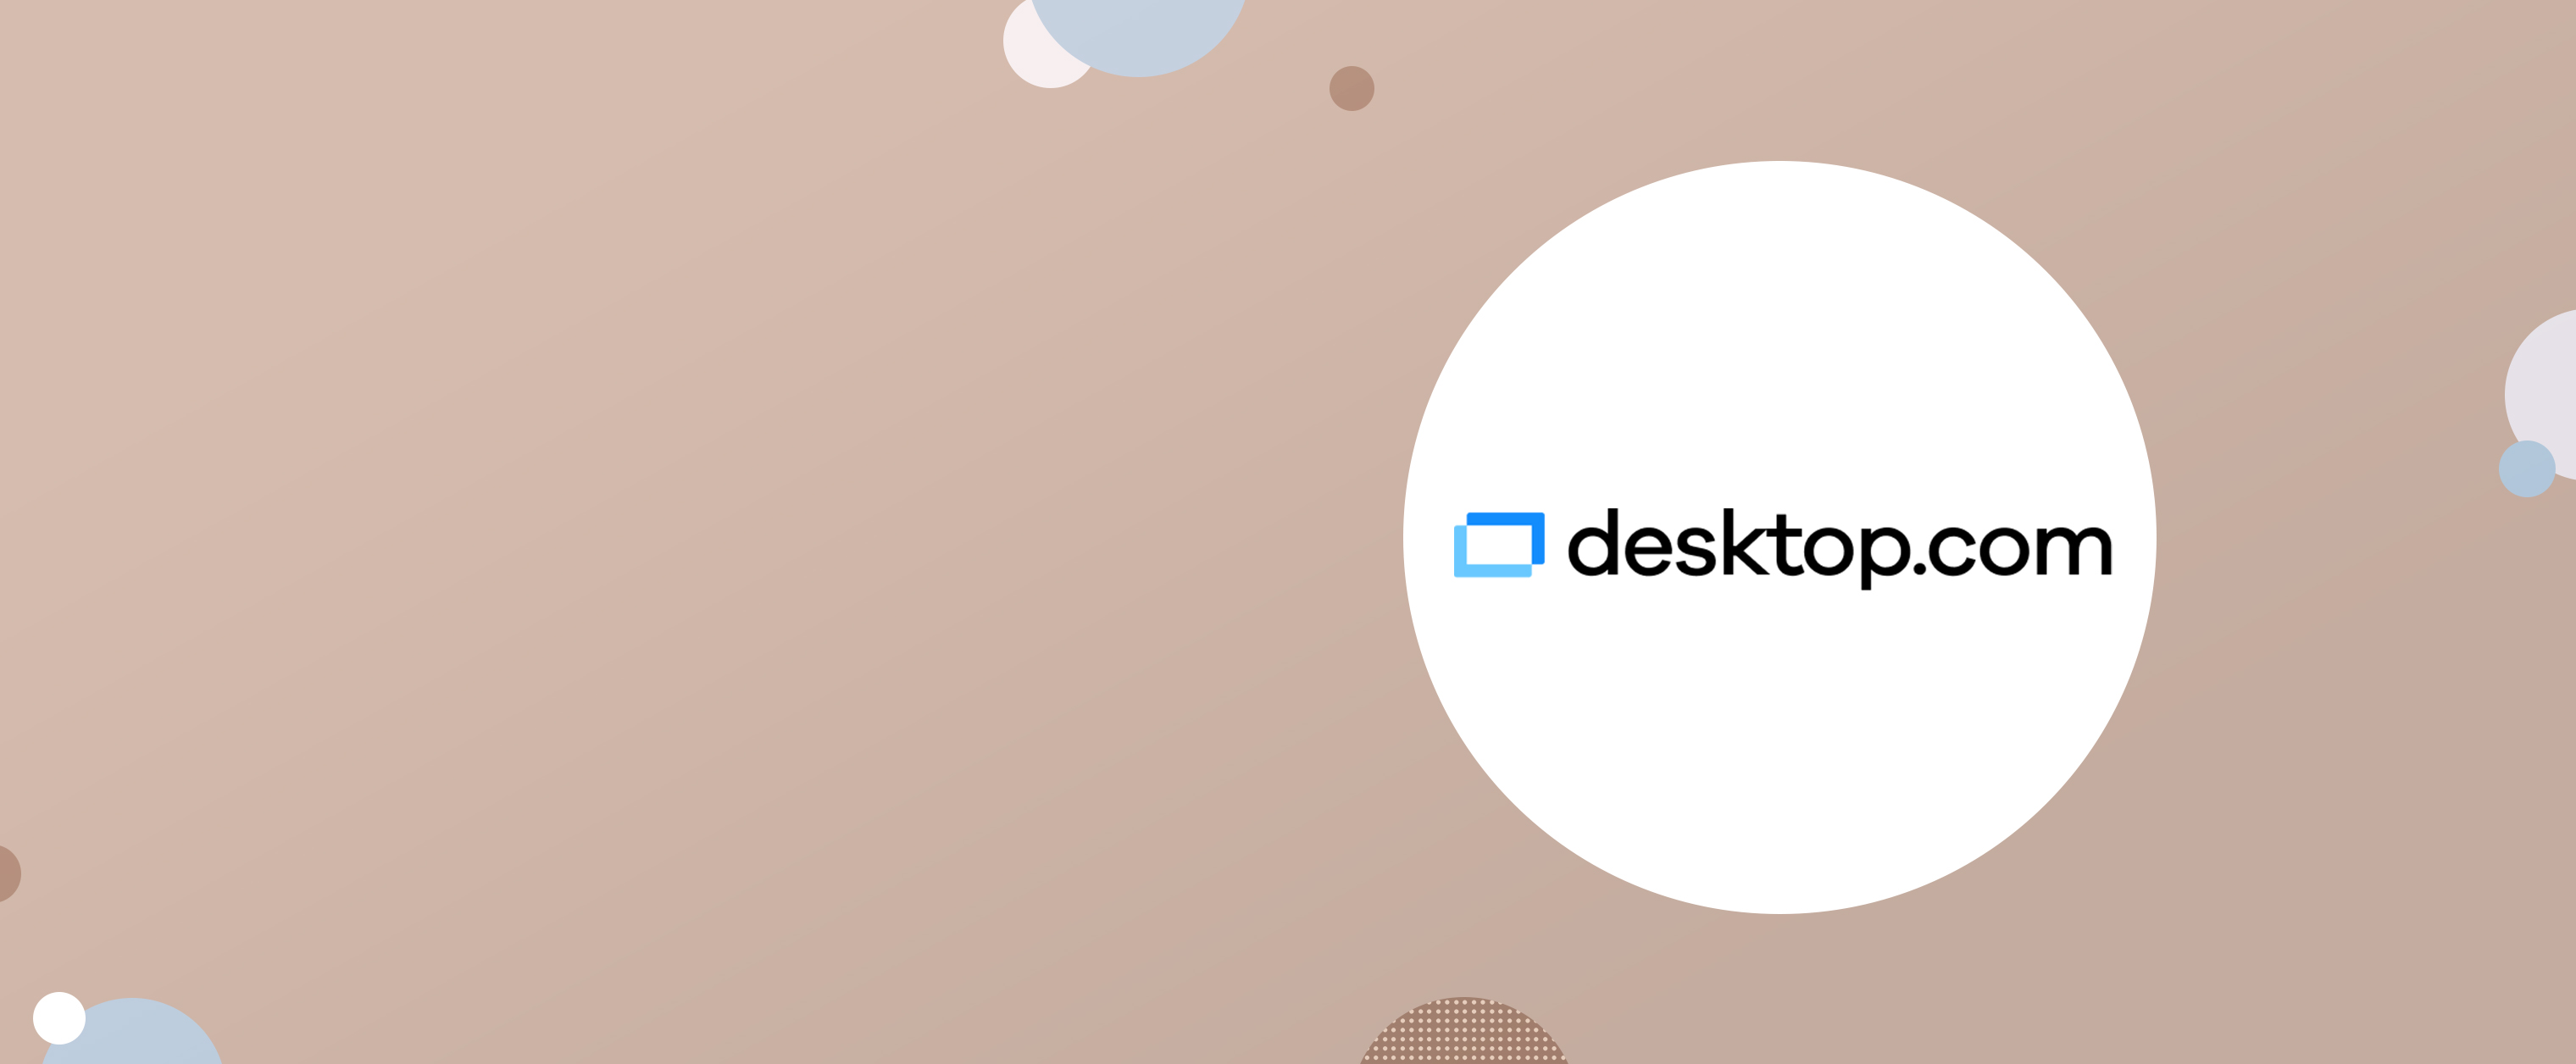 Desktop.com Case study